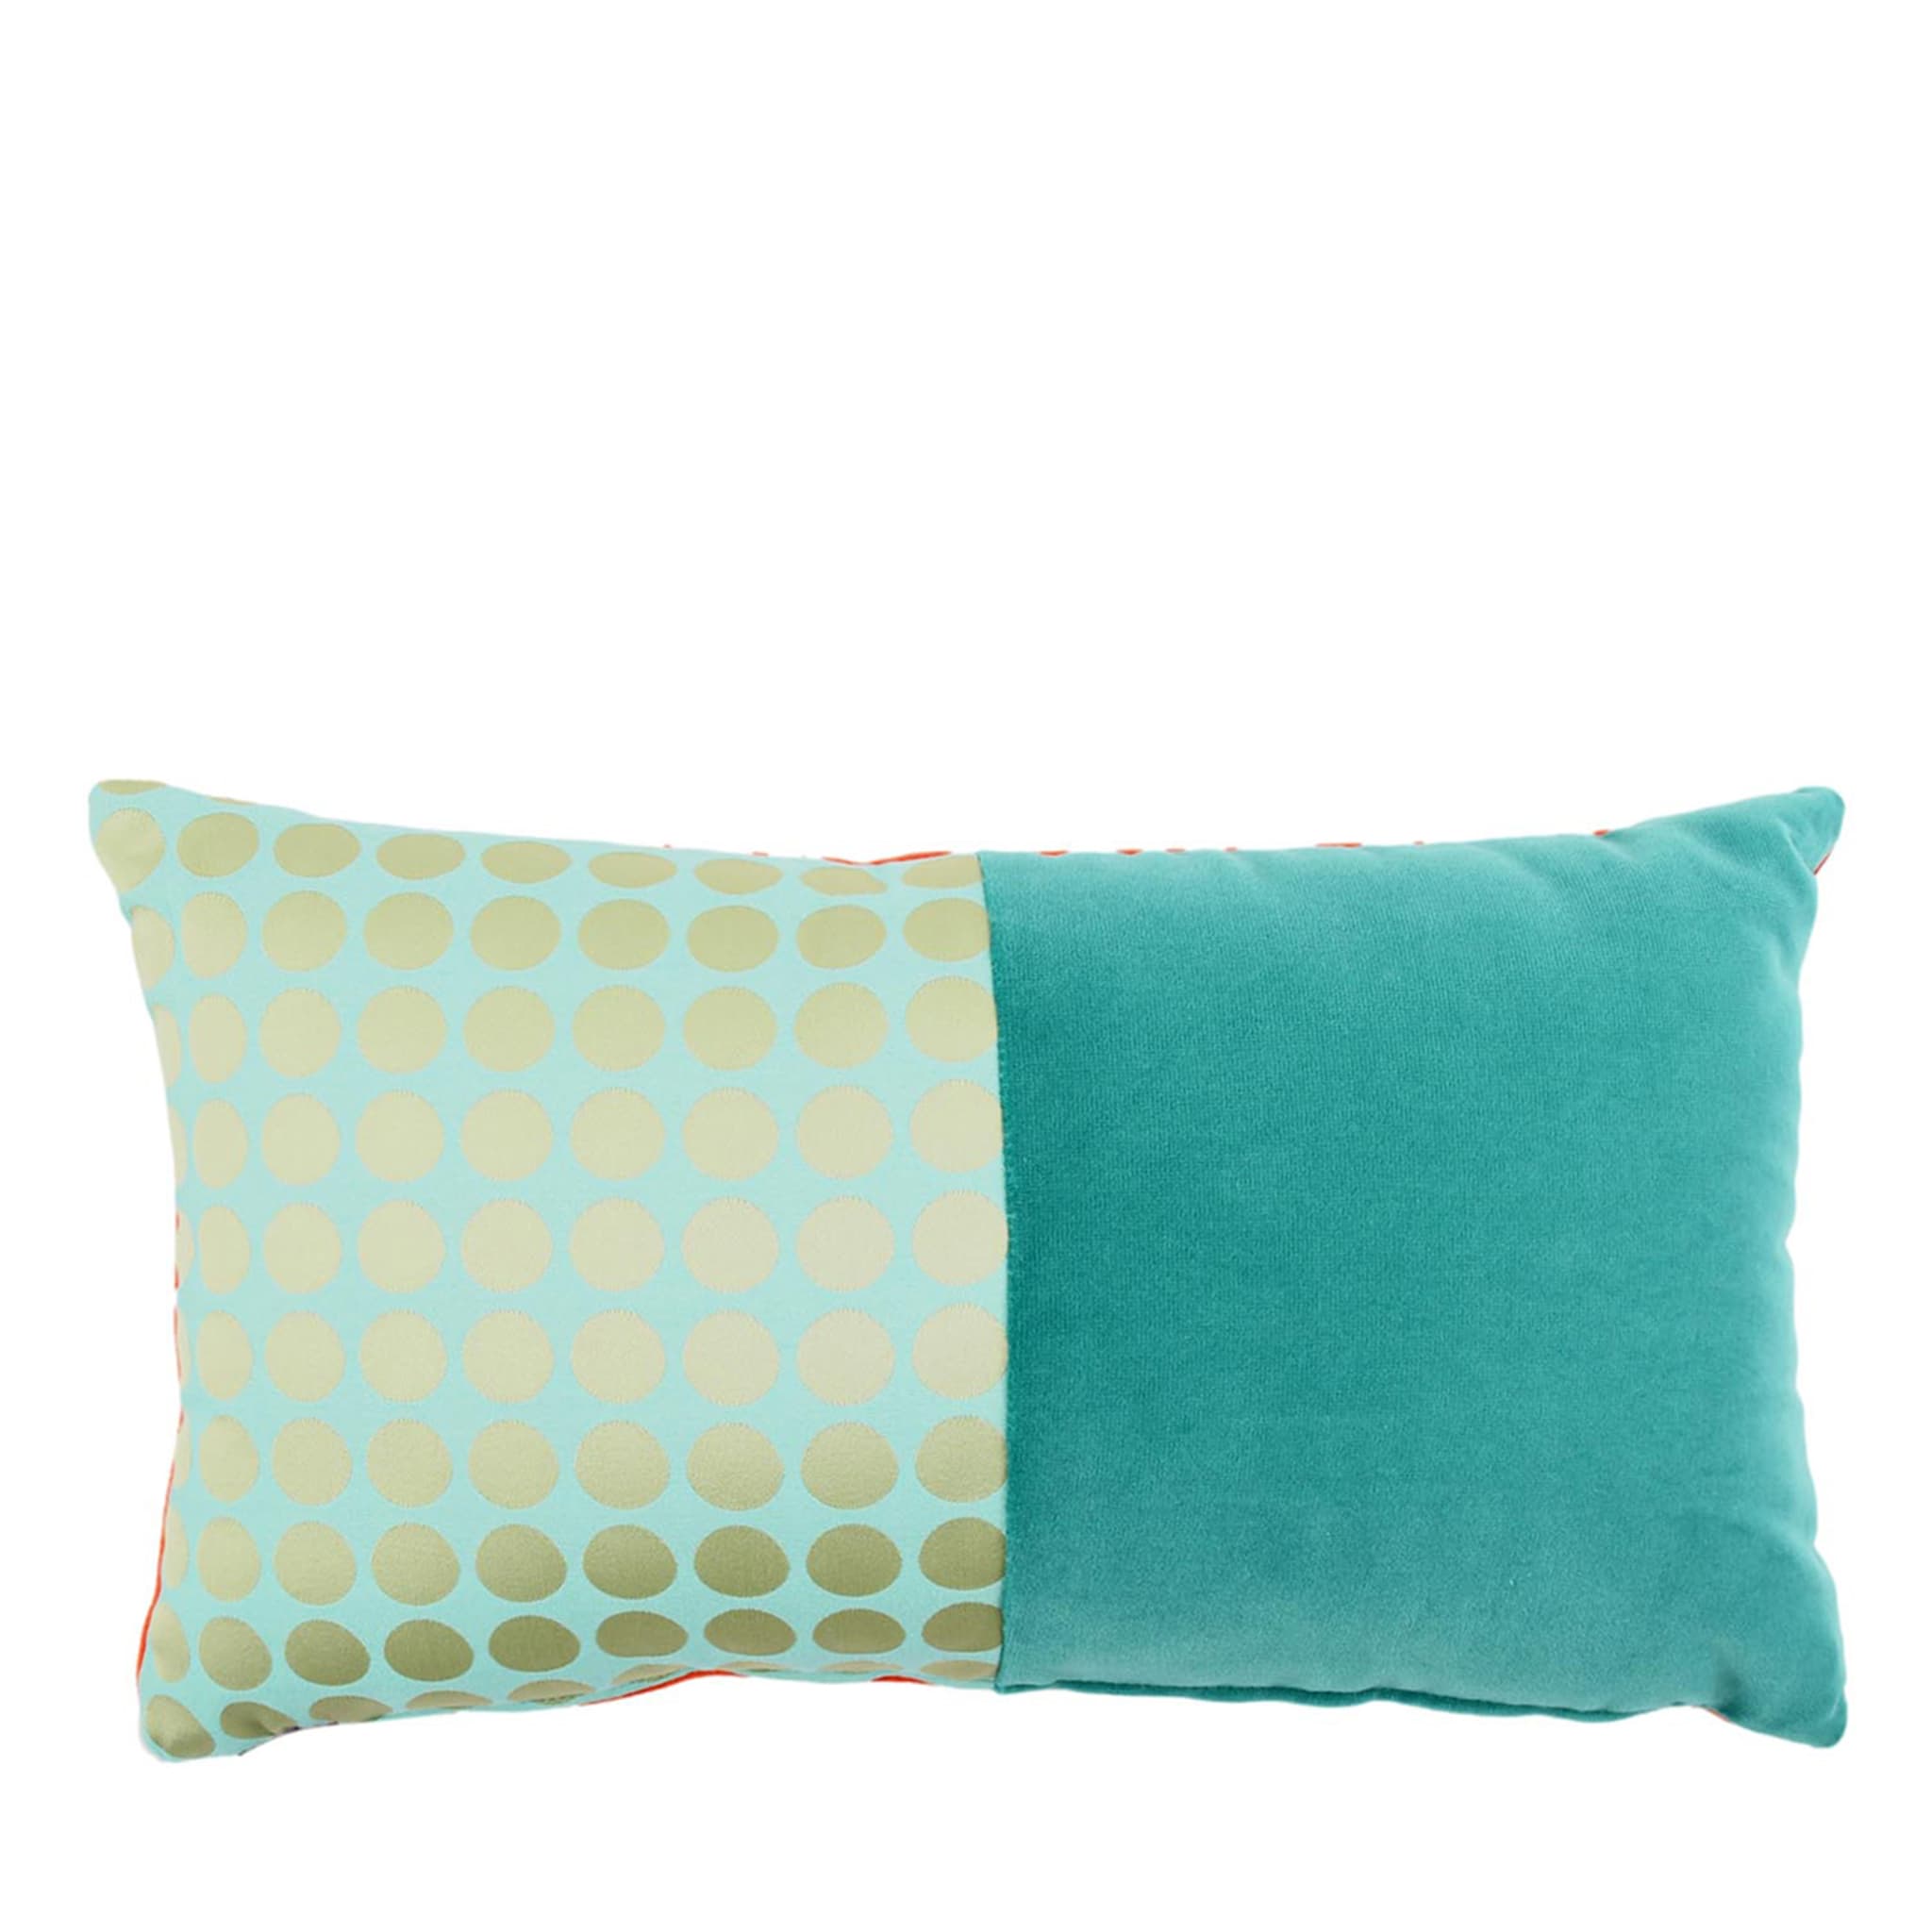 Tiffany Bis Cushion in polka dots jacquard fabric - Main view